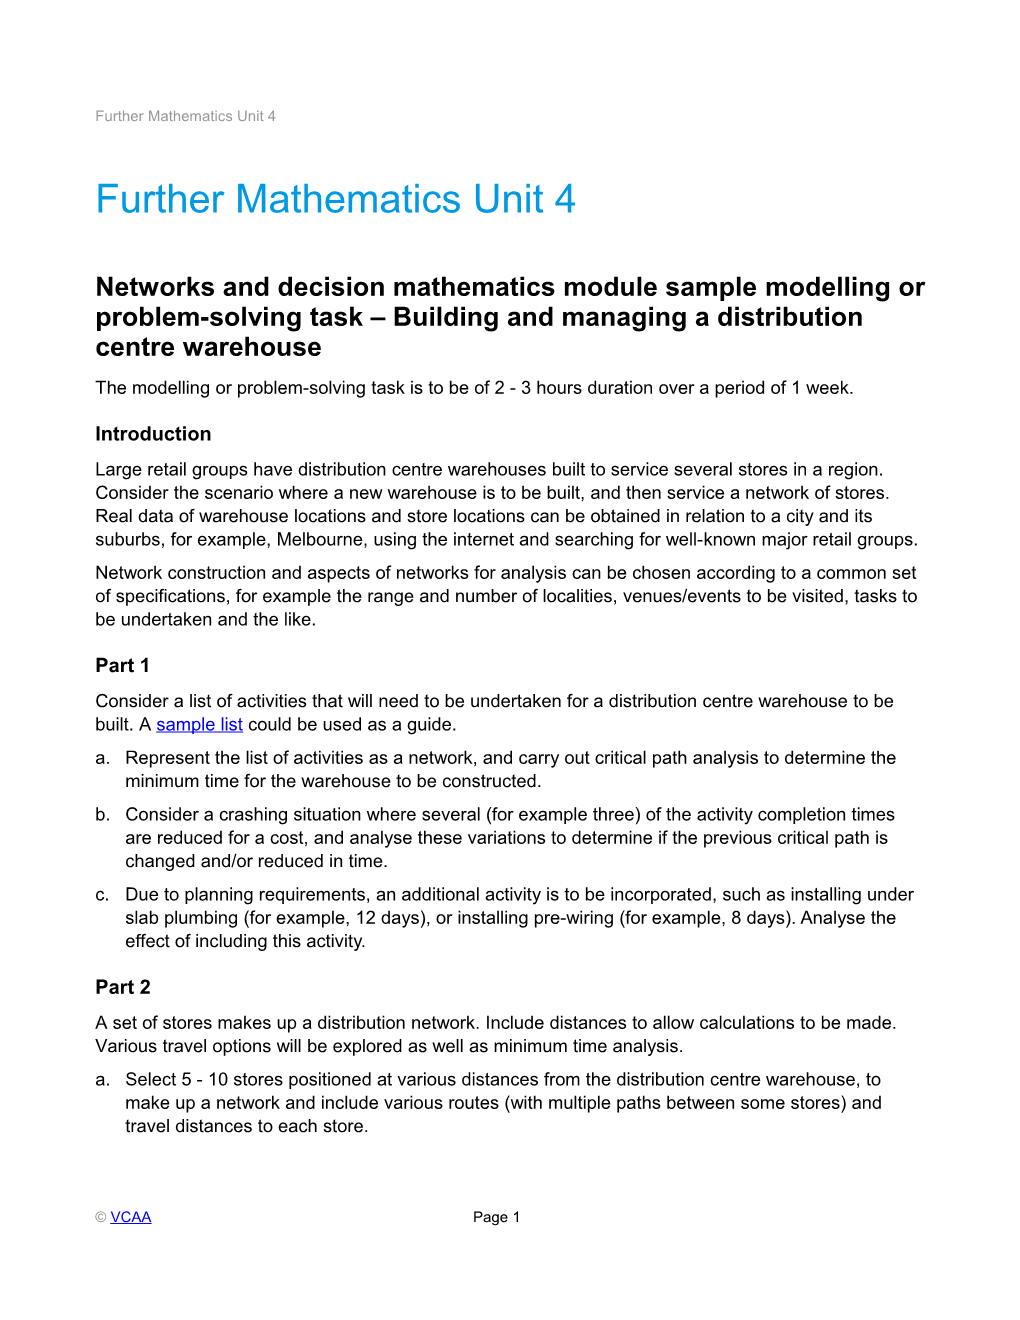 Mathematical Methods Unit 4